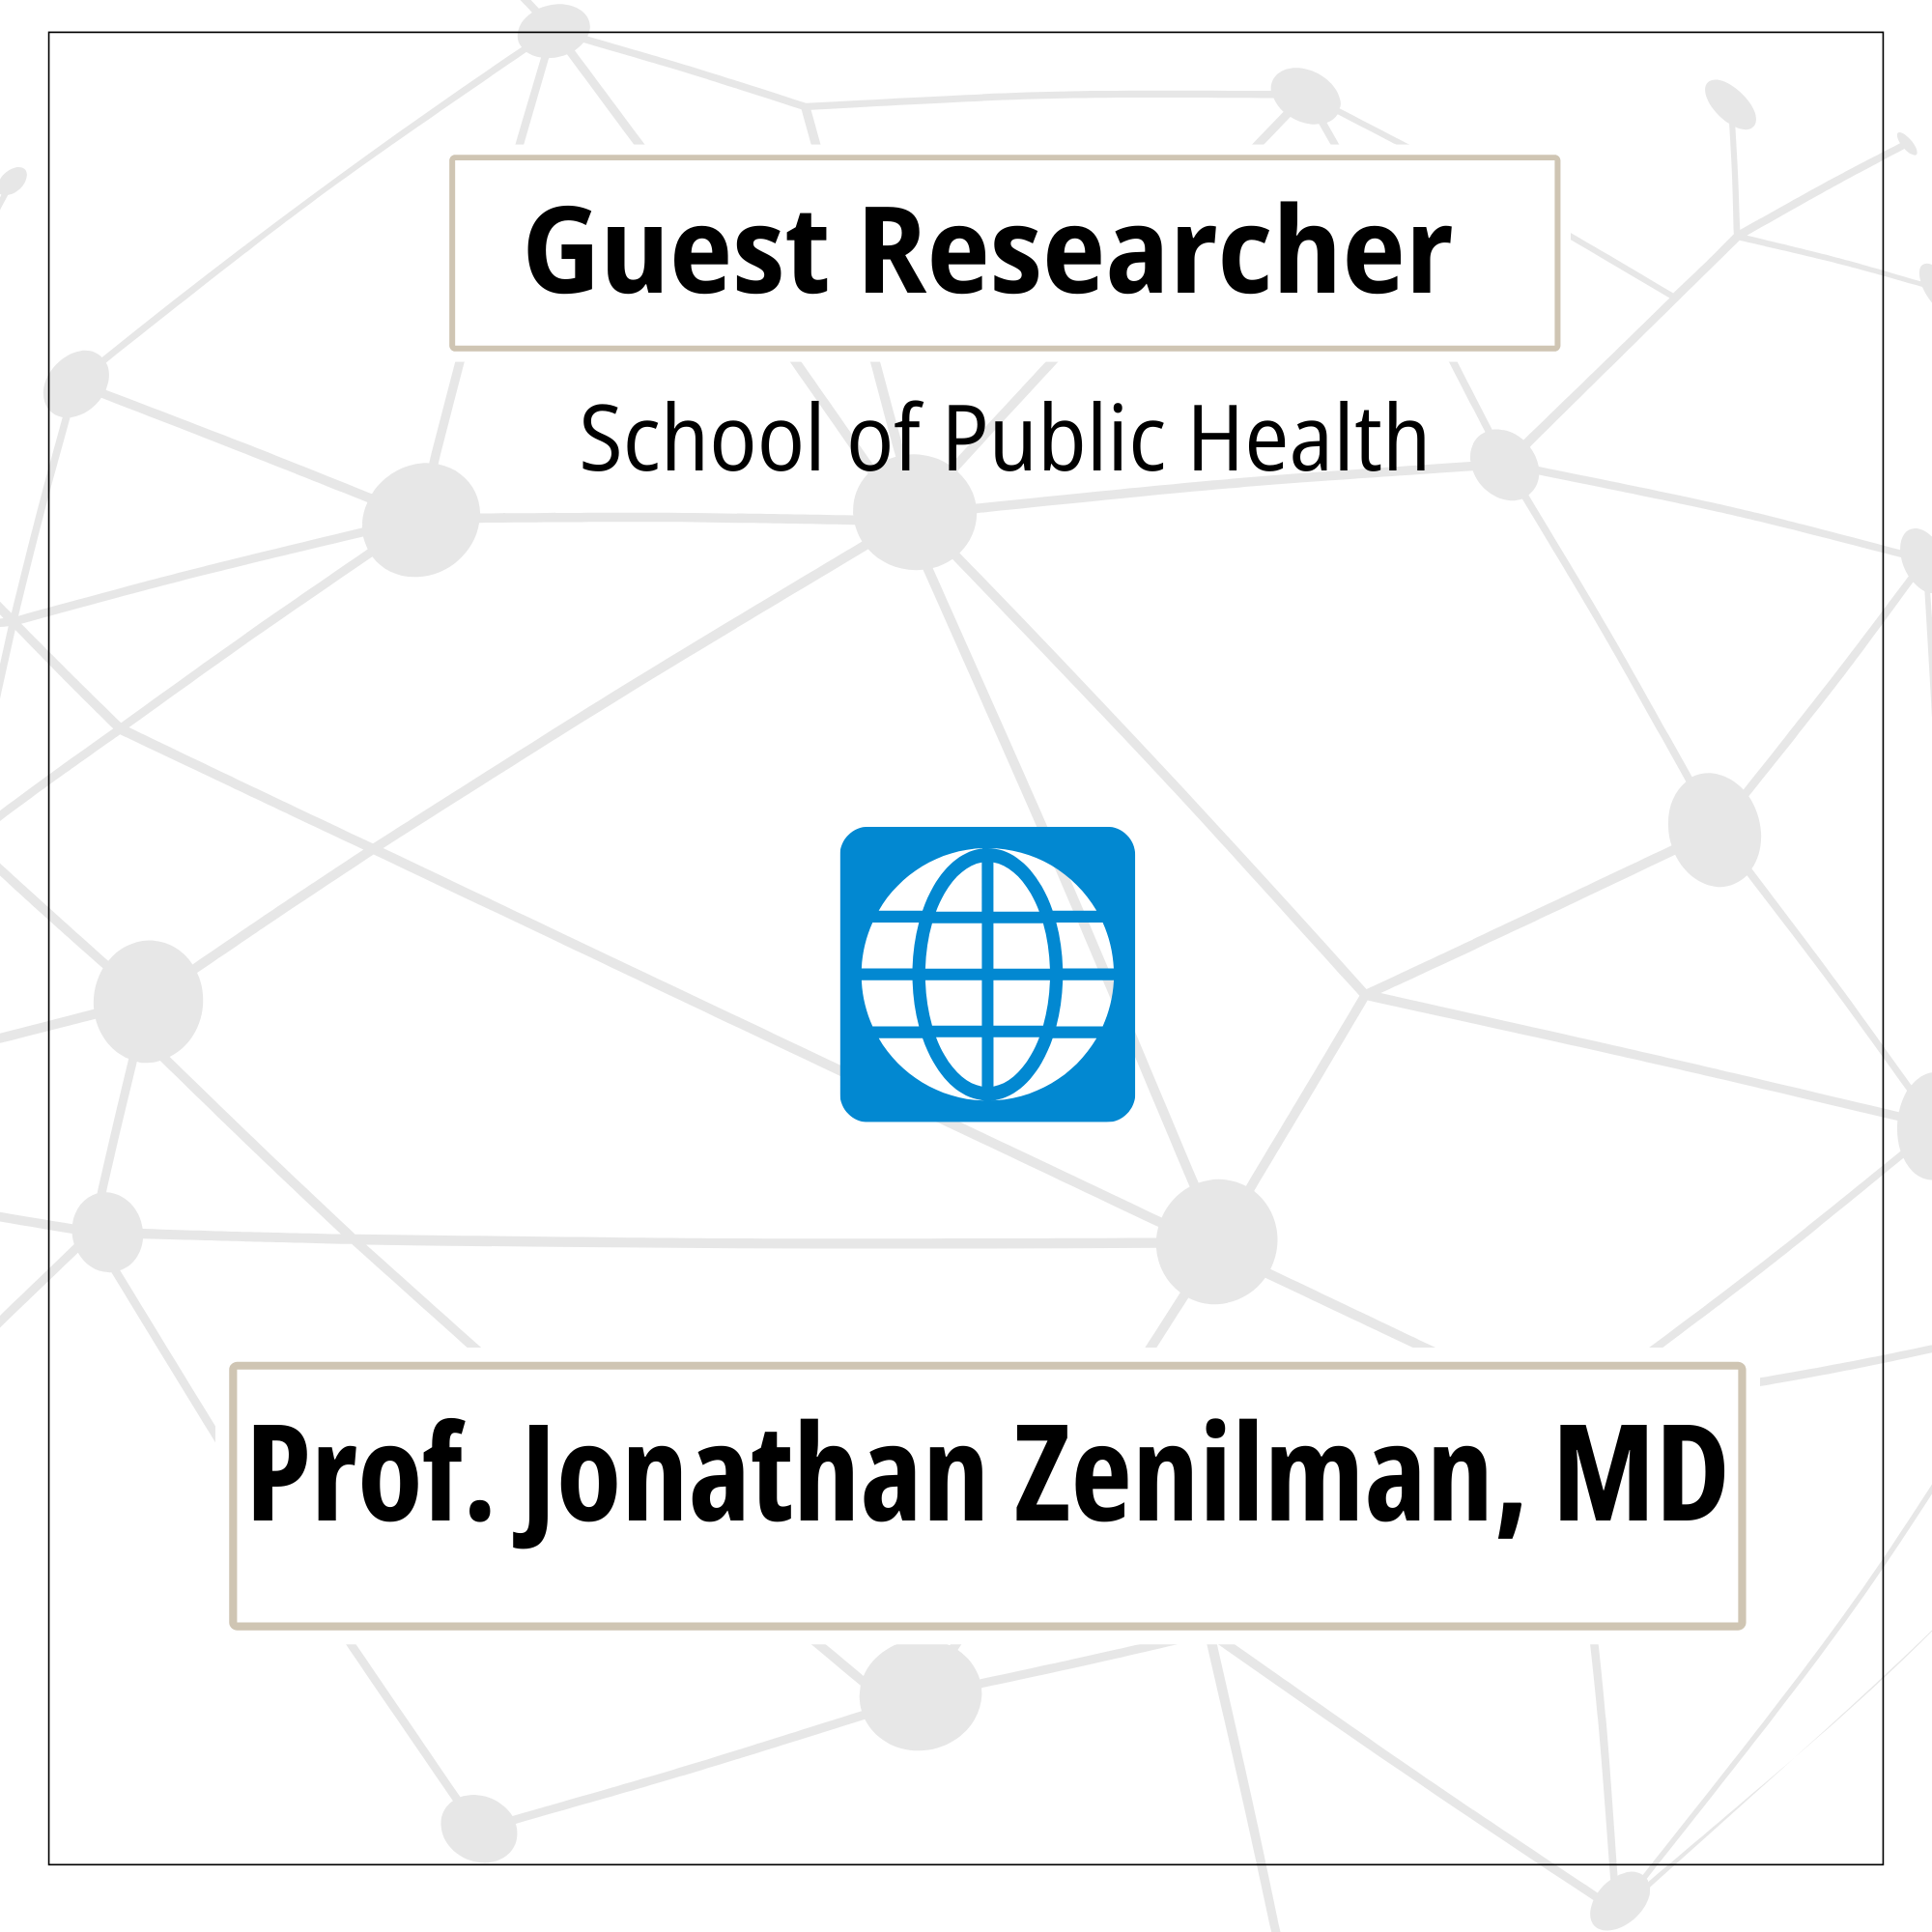 Prof. Jonathan Zenilman